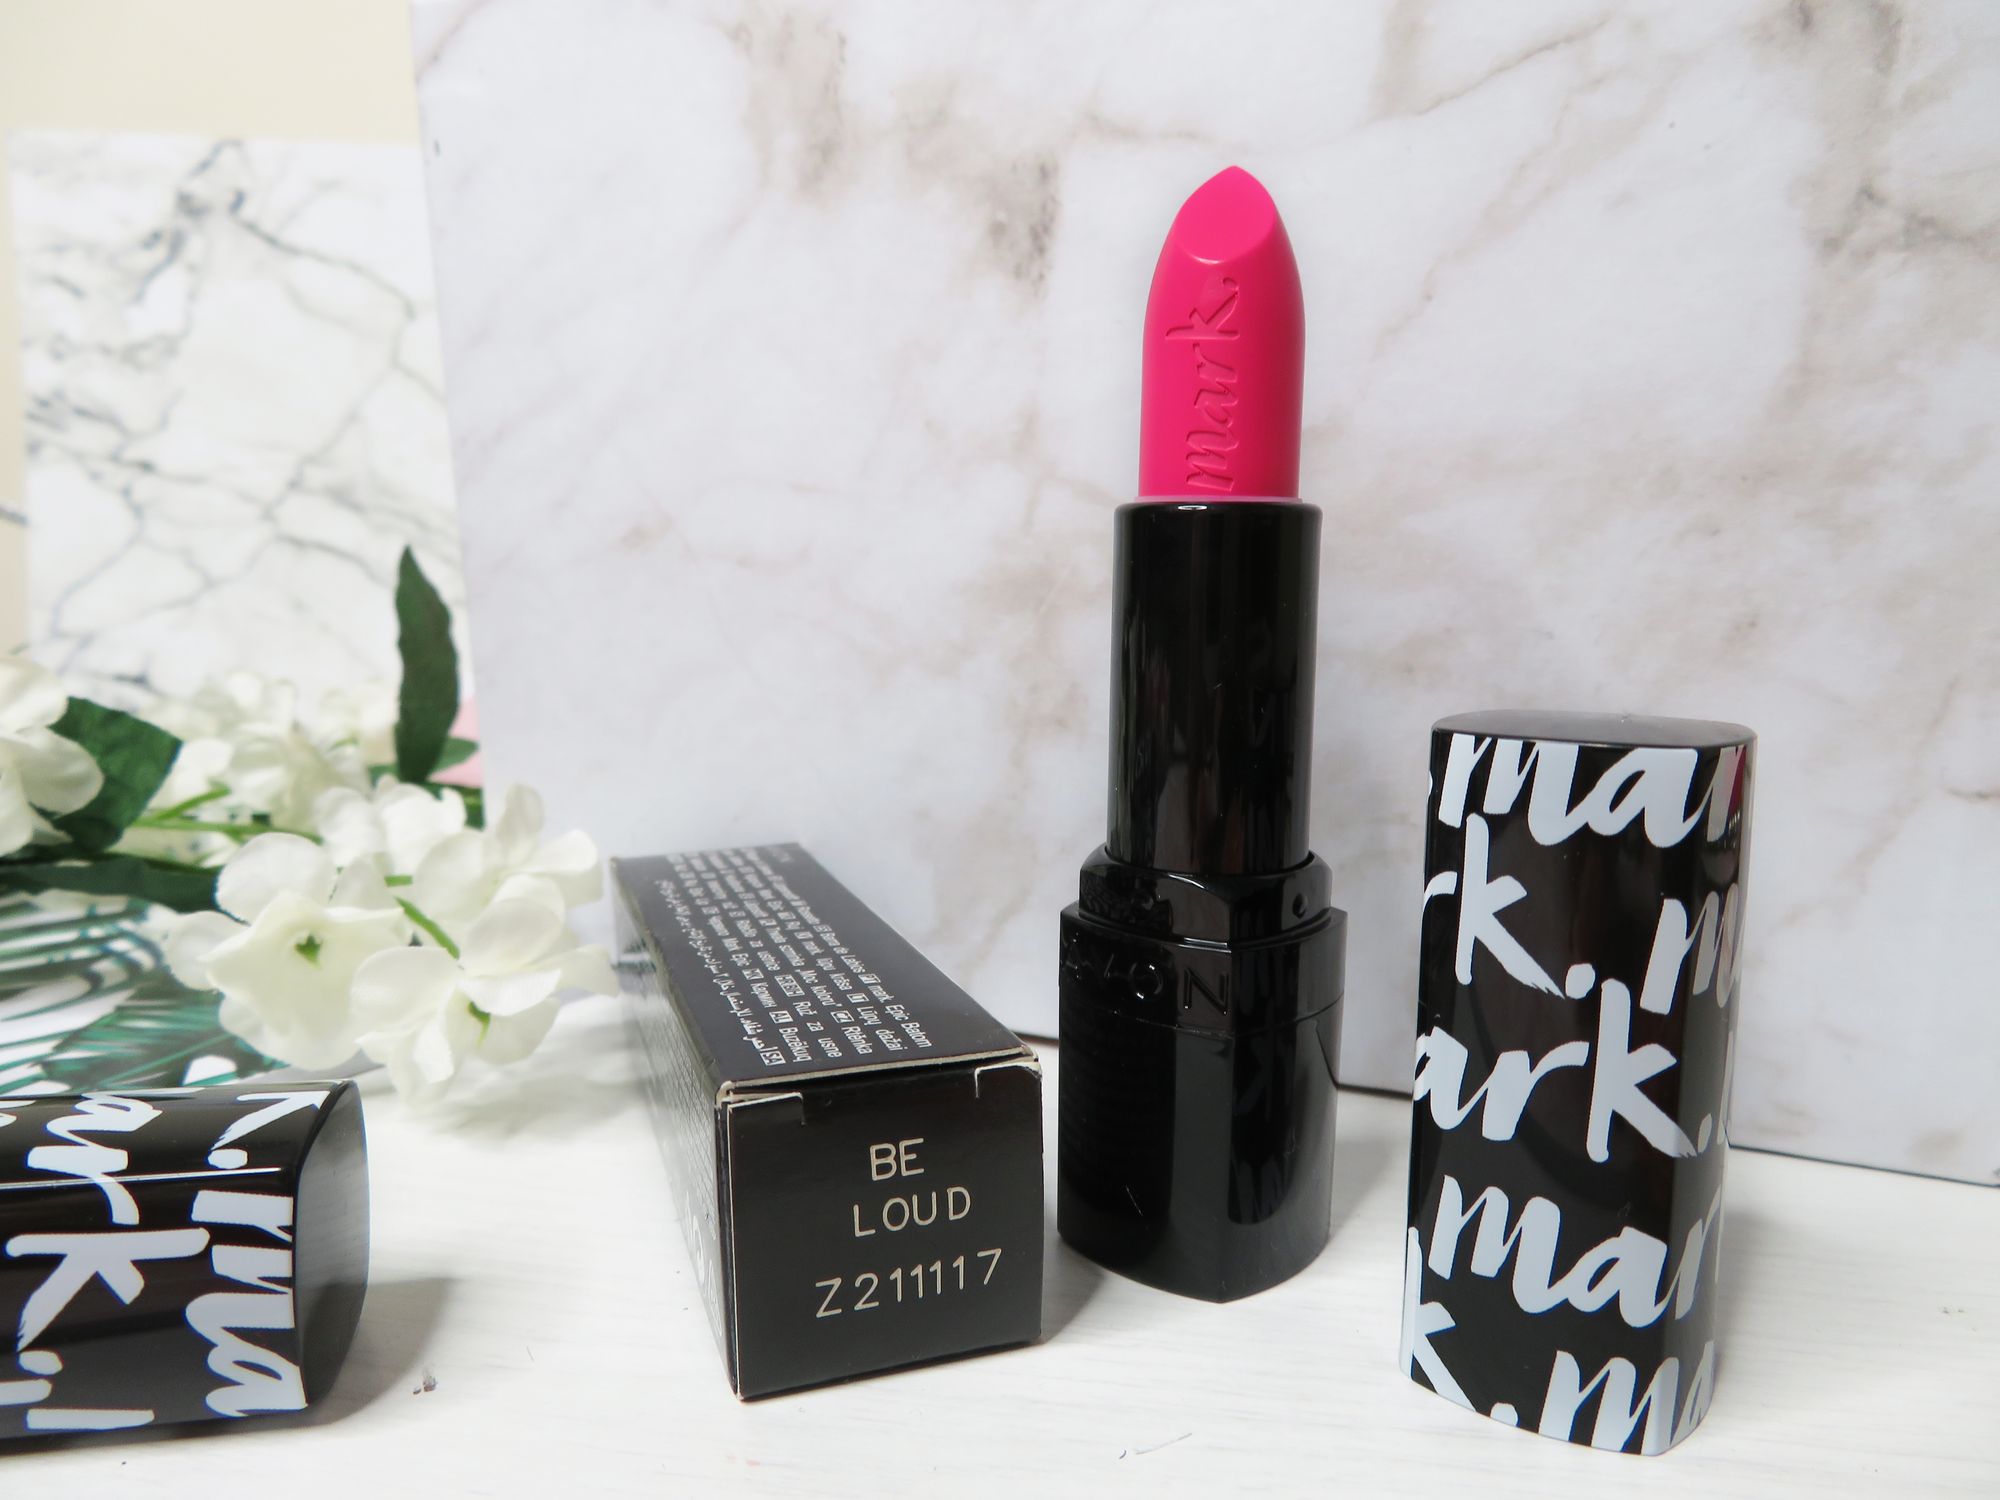 Be Loud - Avon Mark Epic Lipsticks - Miss Boux